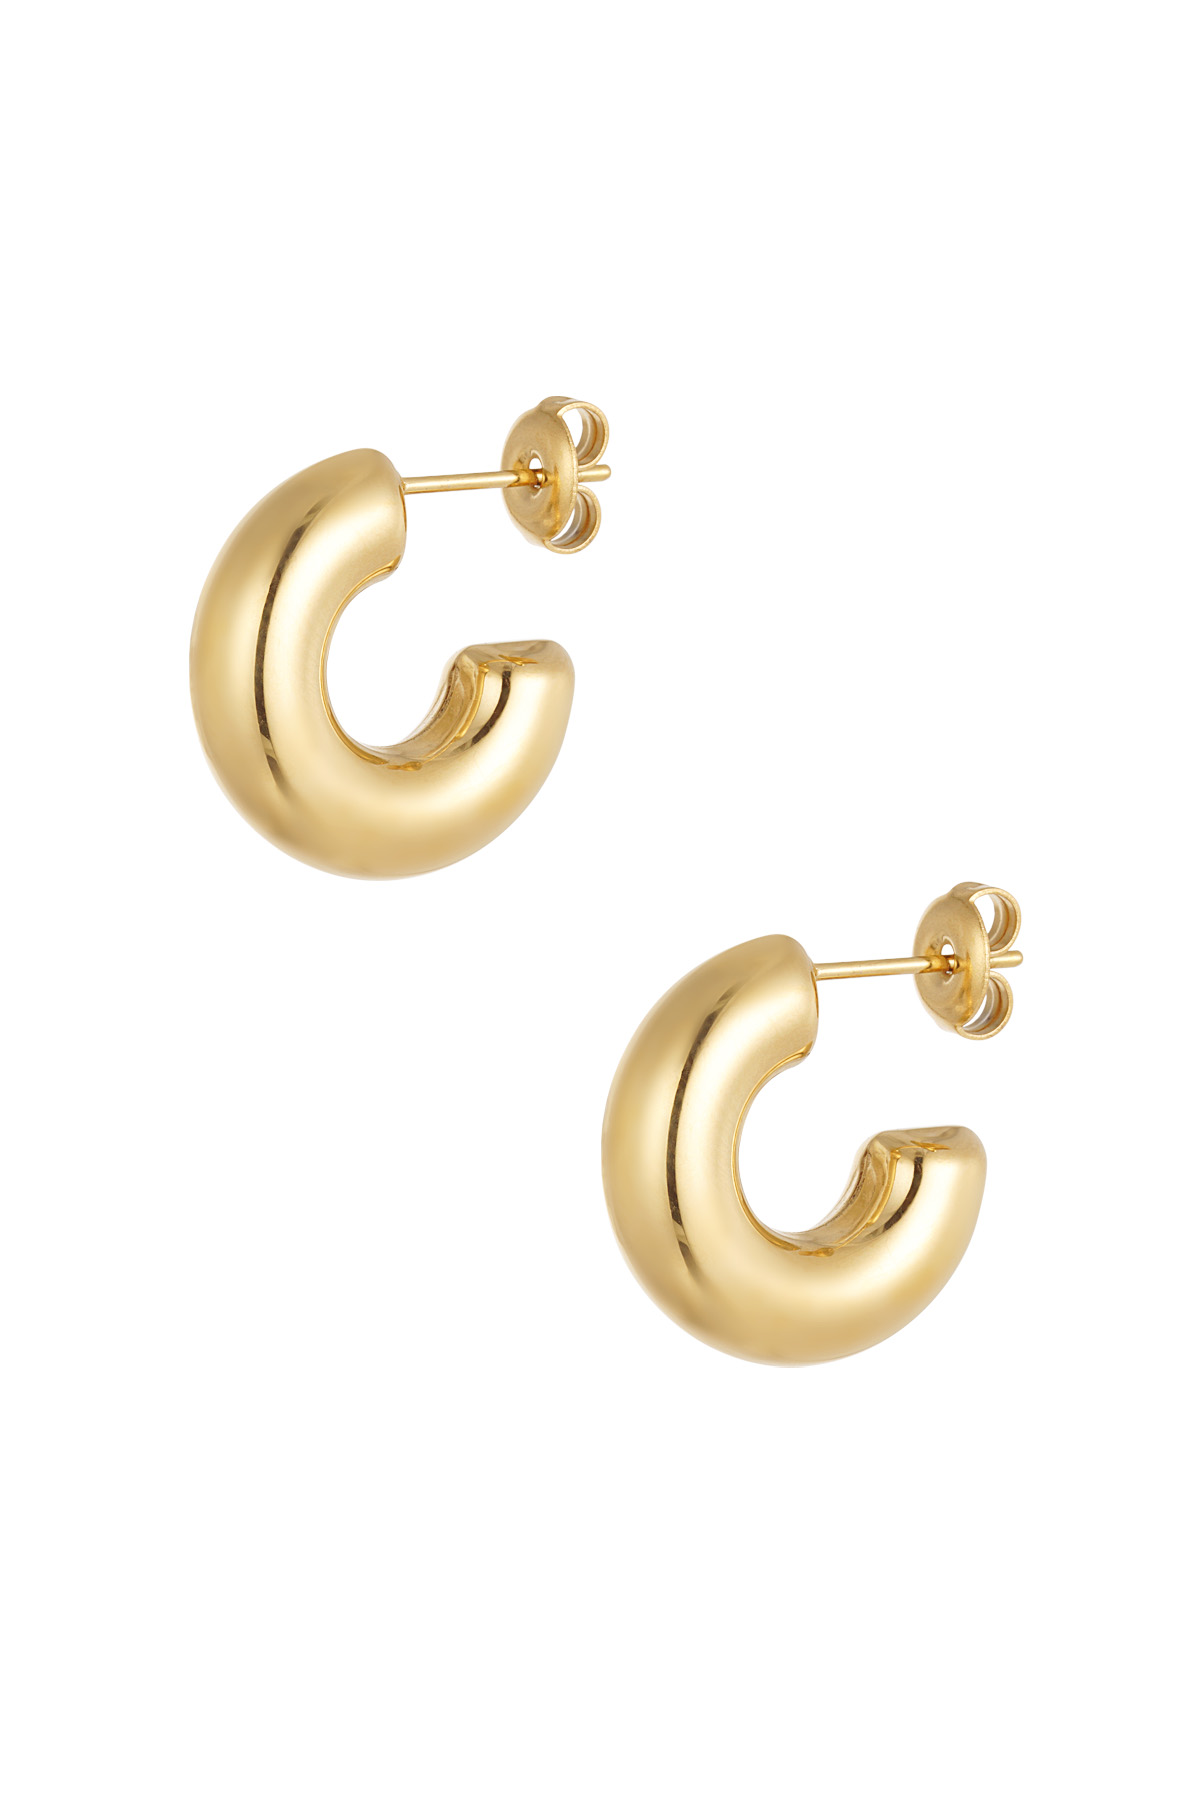 Earrings aesthetic basic half small moon - gold 